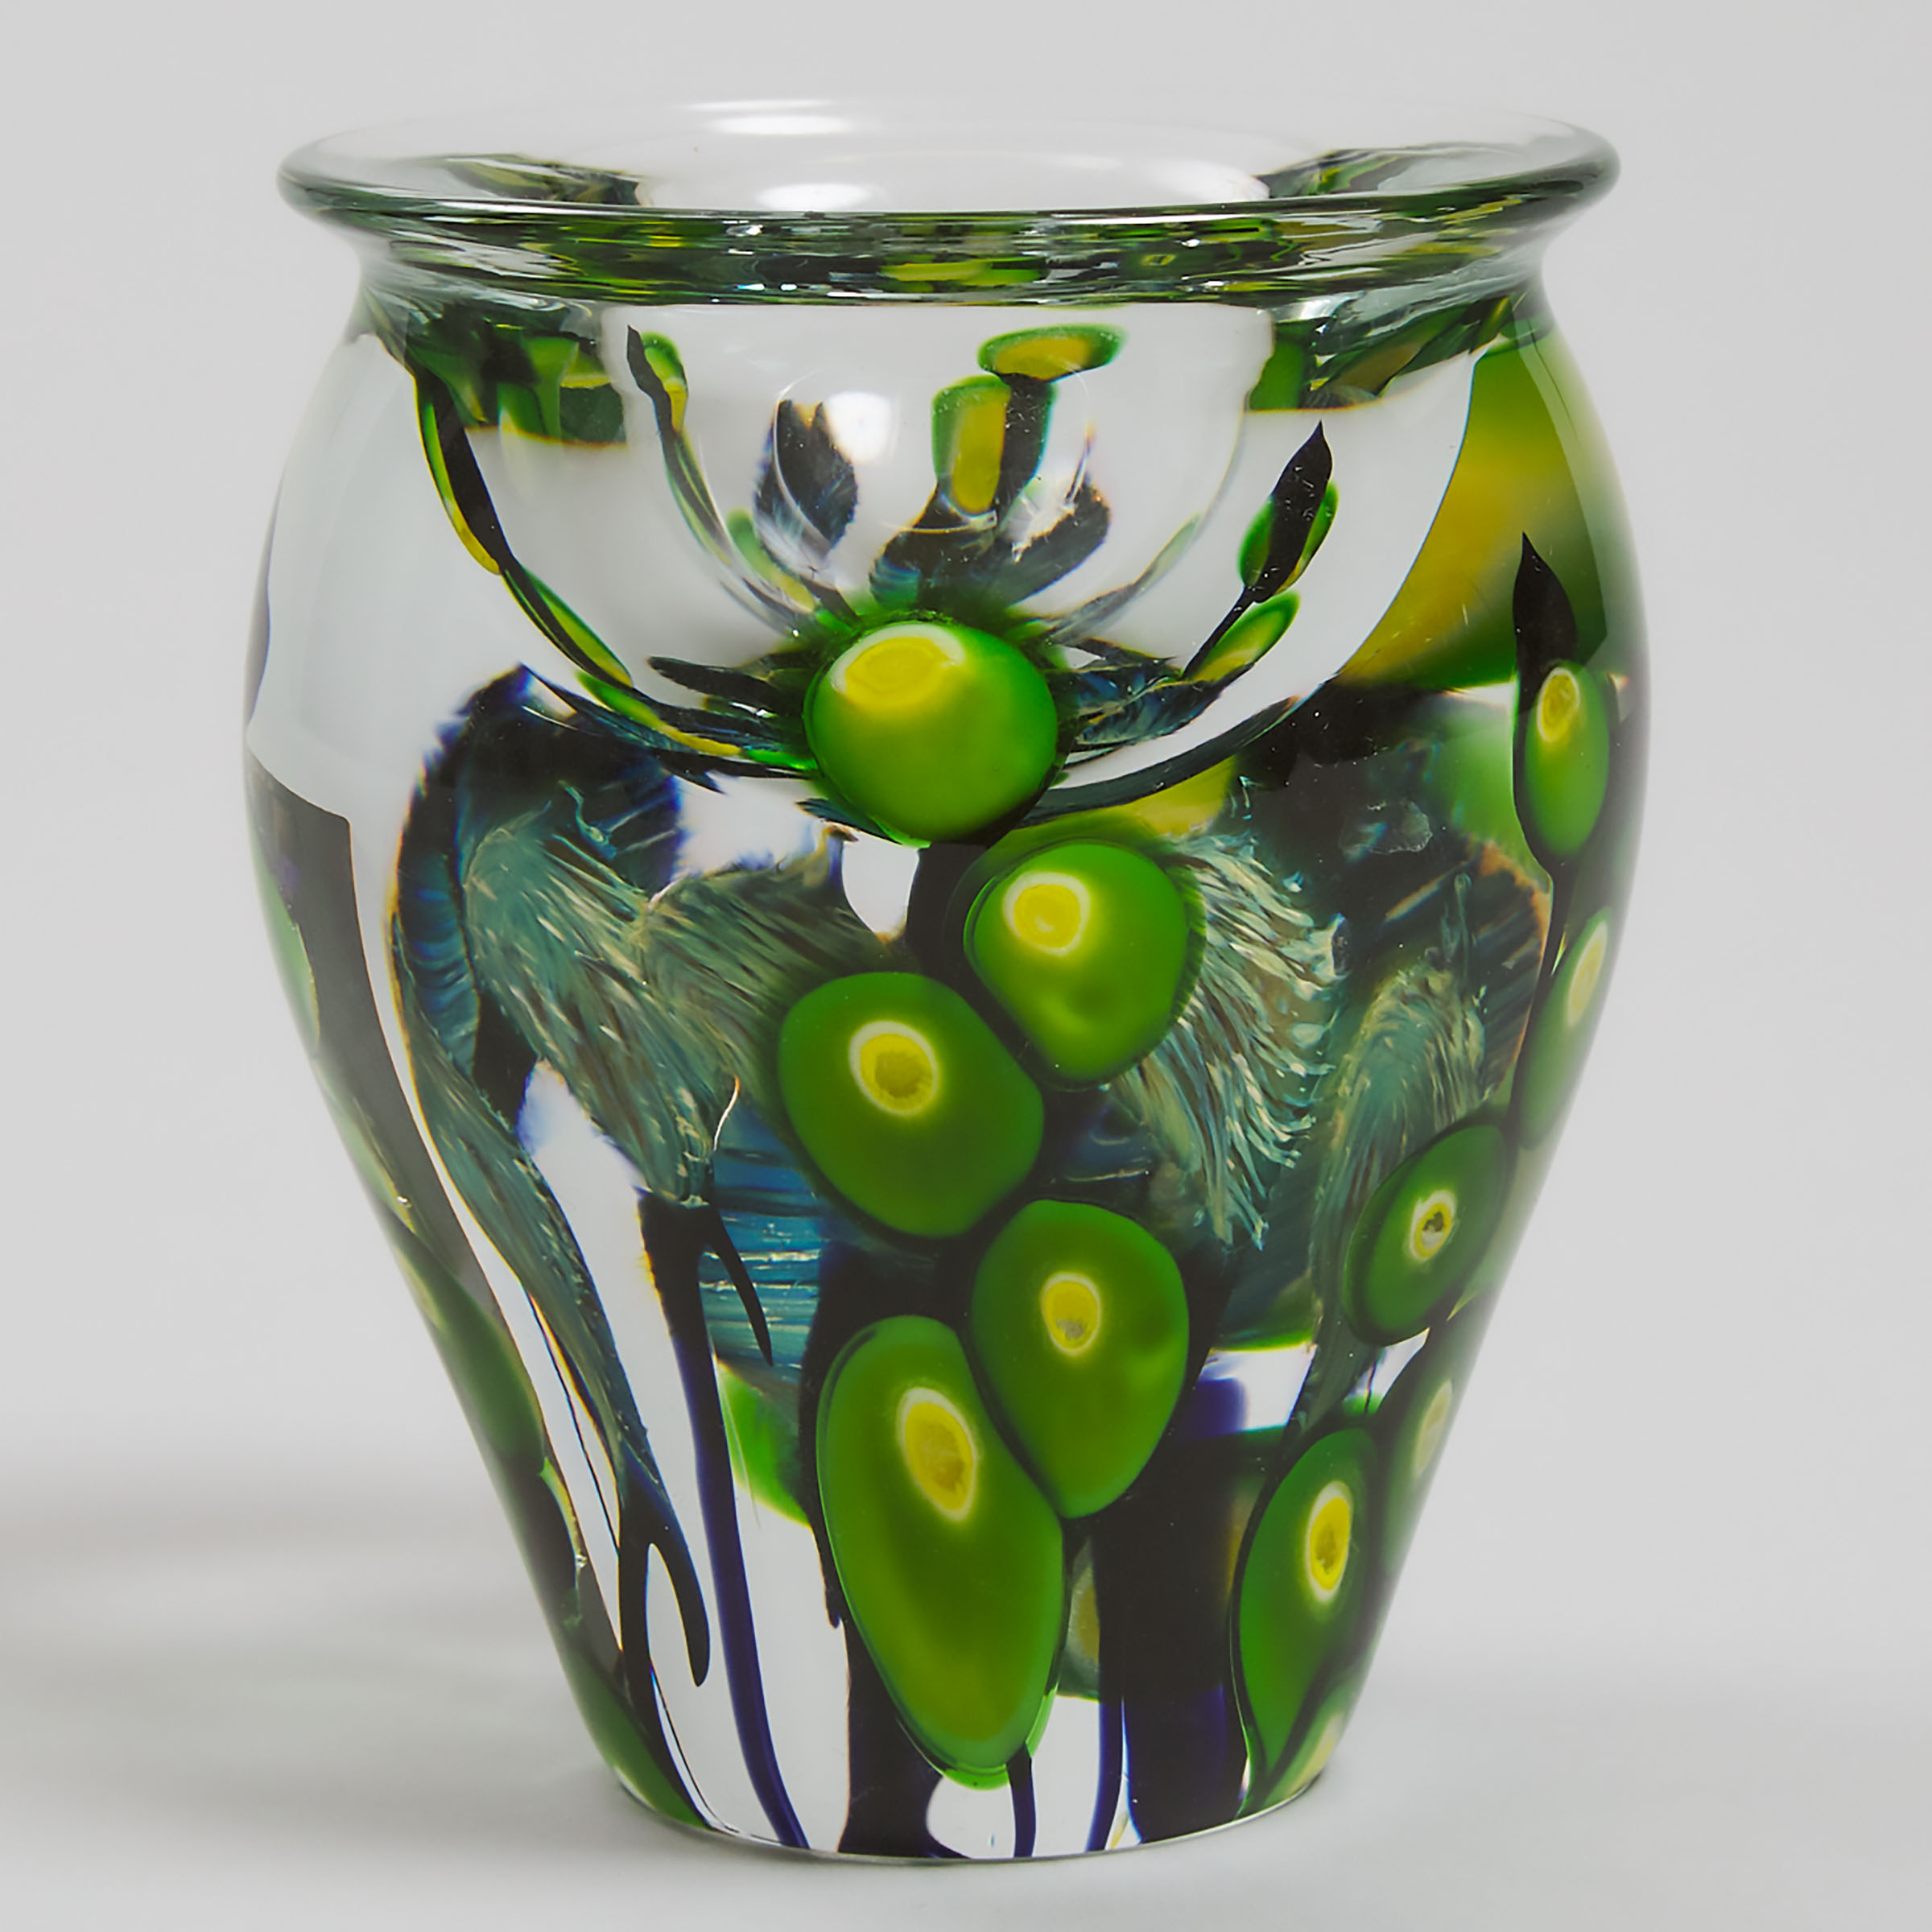 David Lotton (American, b.1960), Internally Decorated Glass Paperweight Vase, 2001